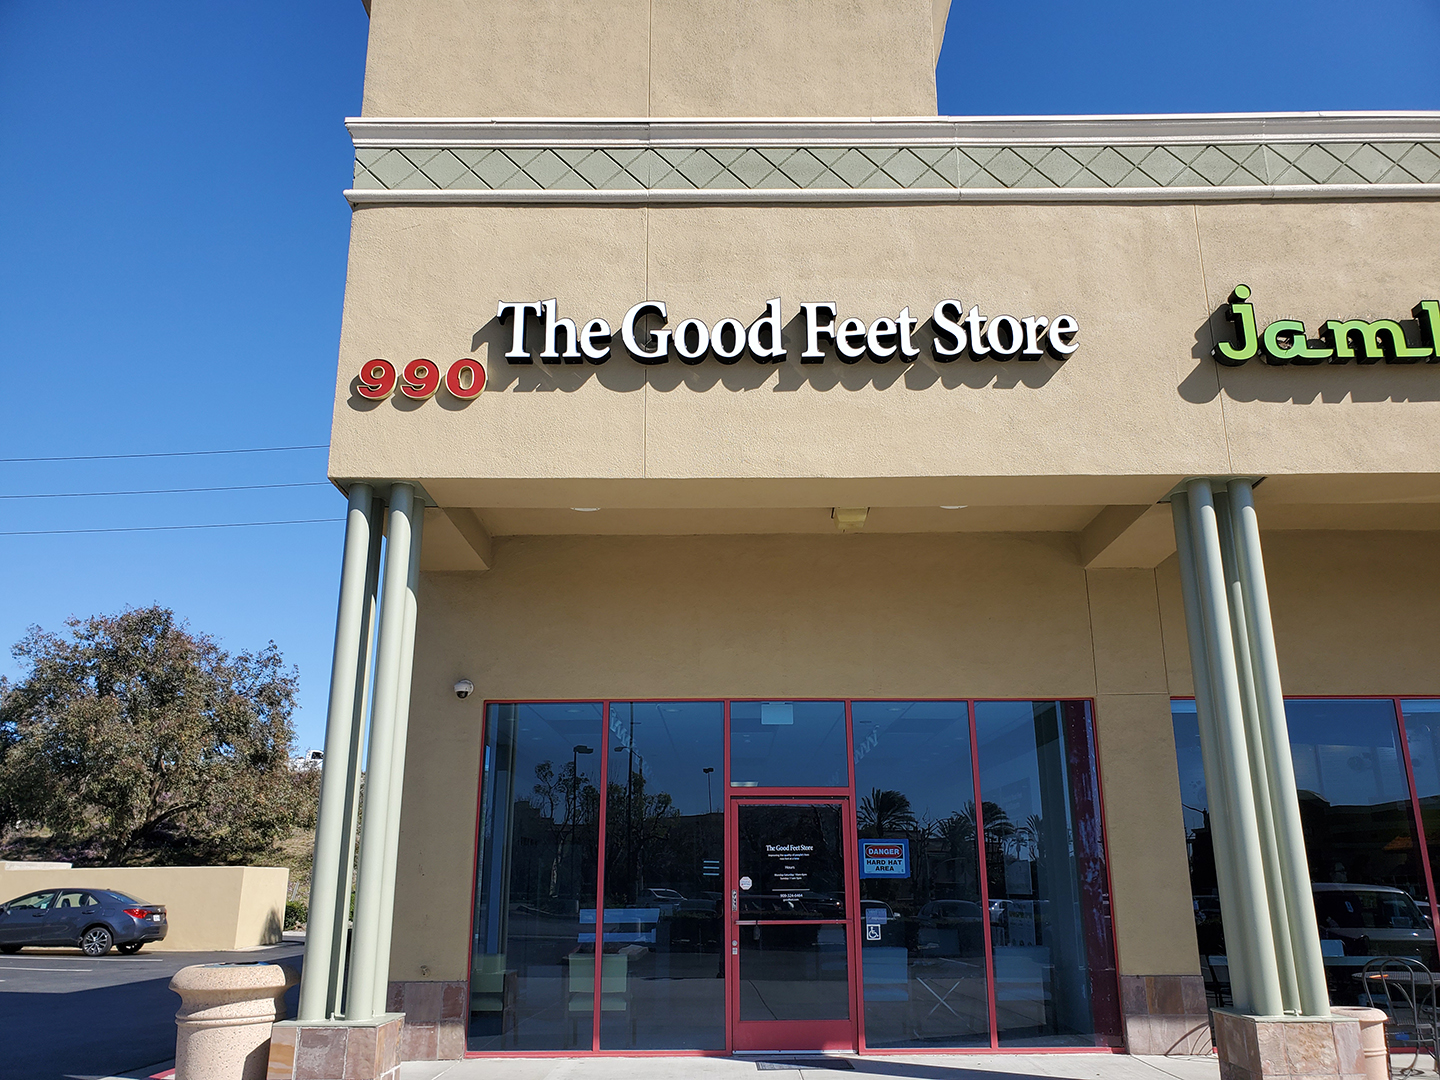 The Good Feet Store